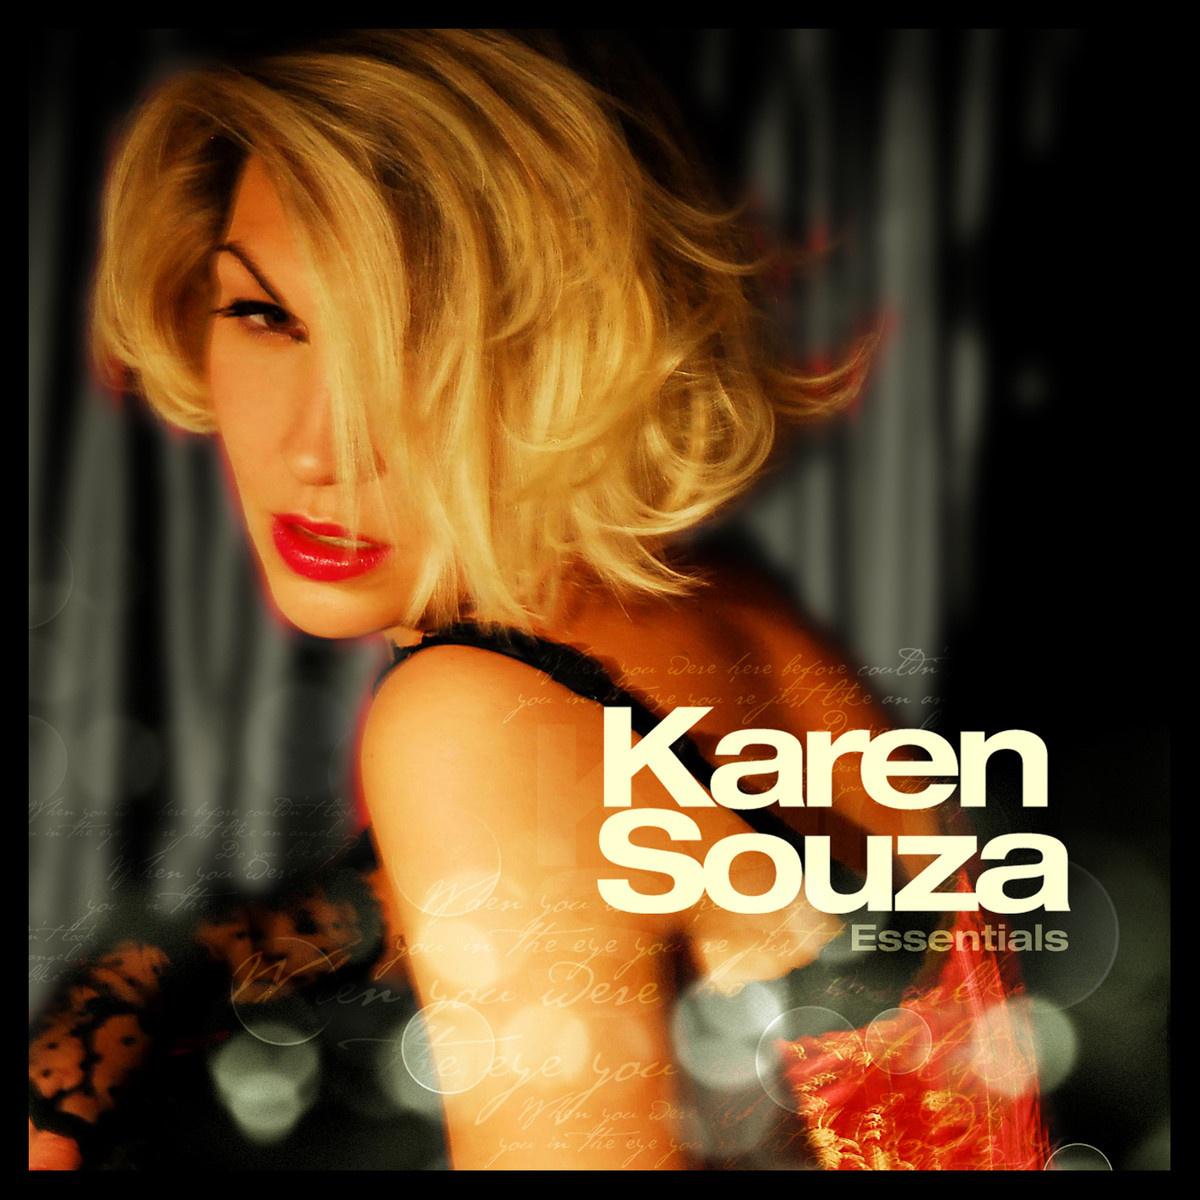 Karen Souza - Every Breath You Take